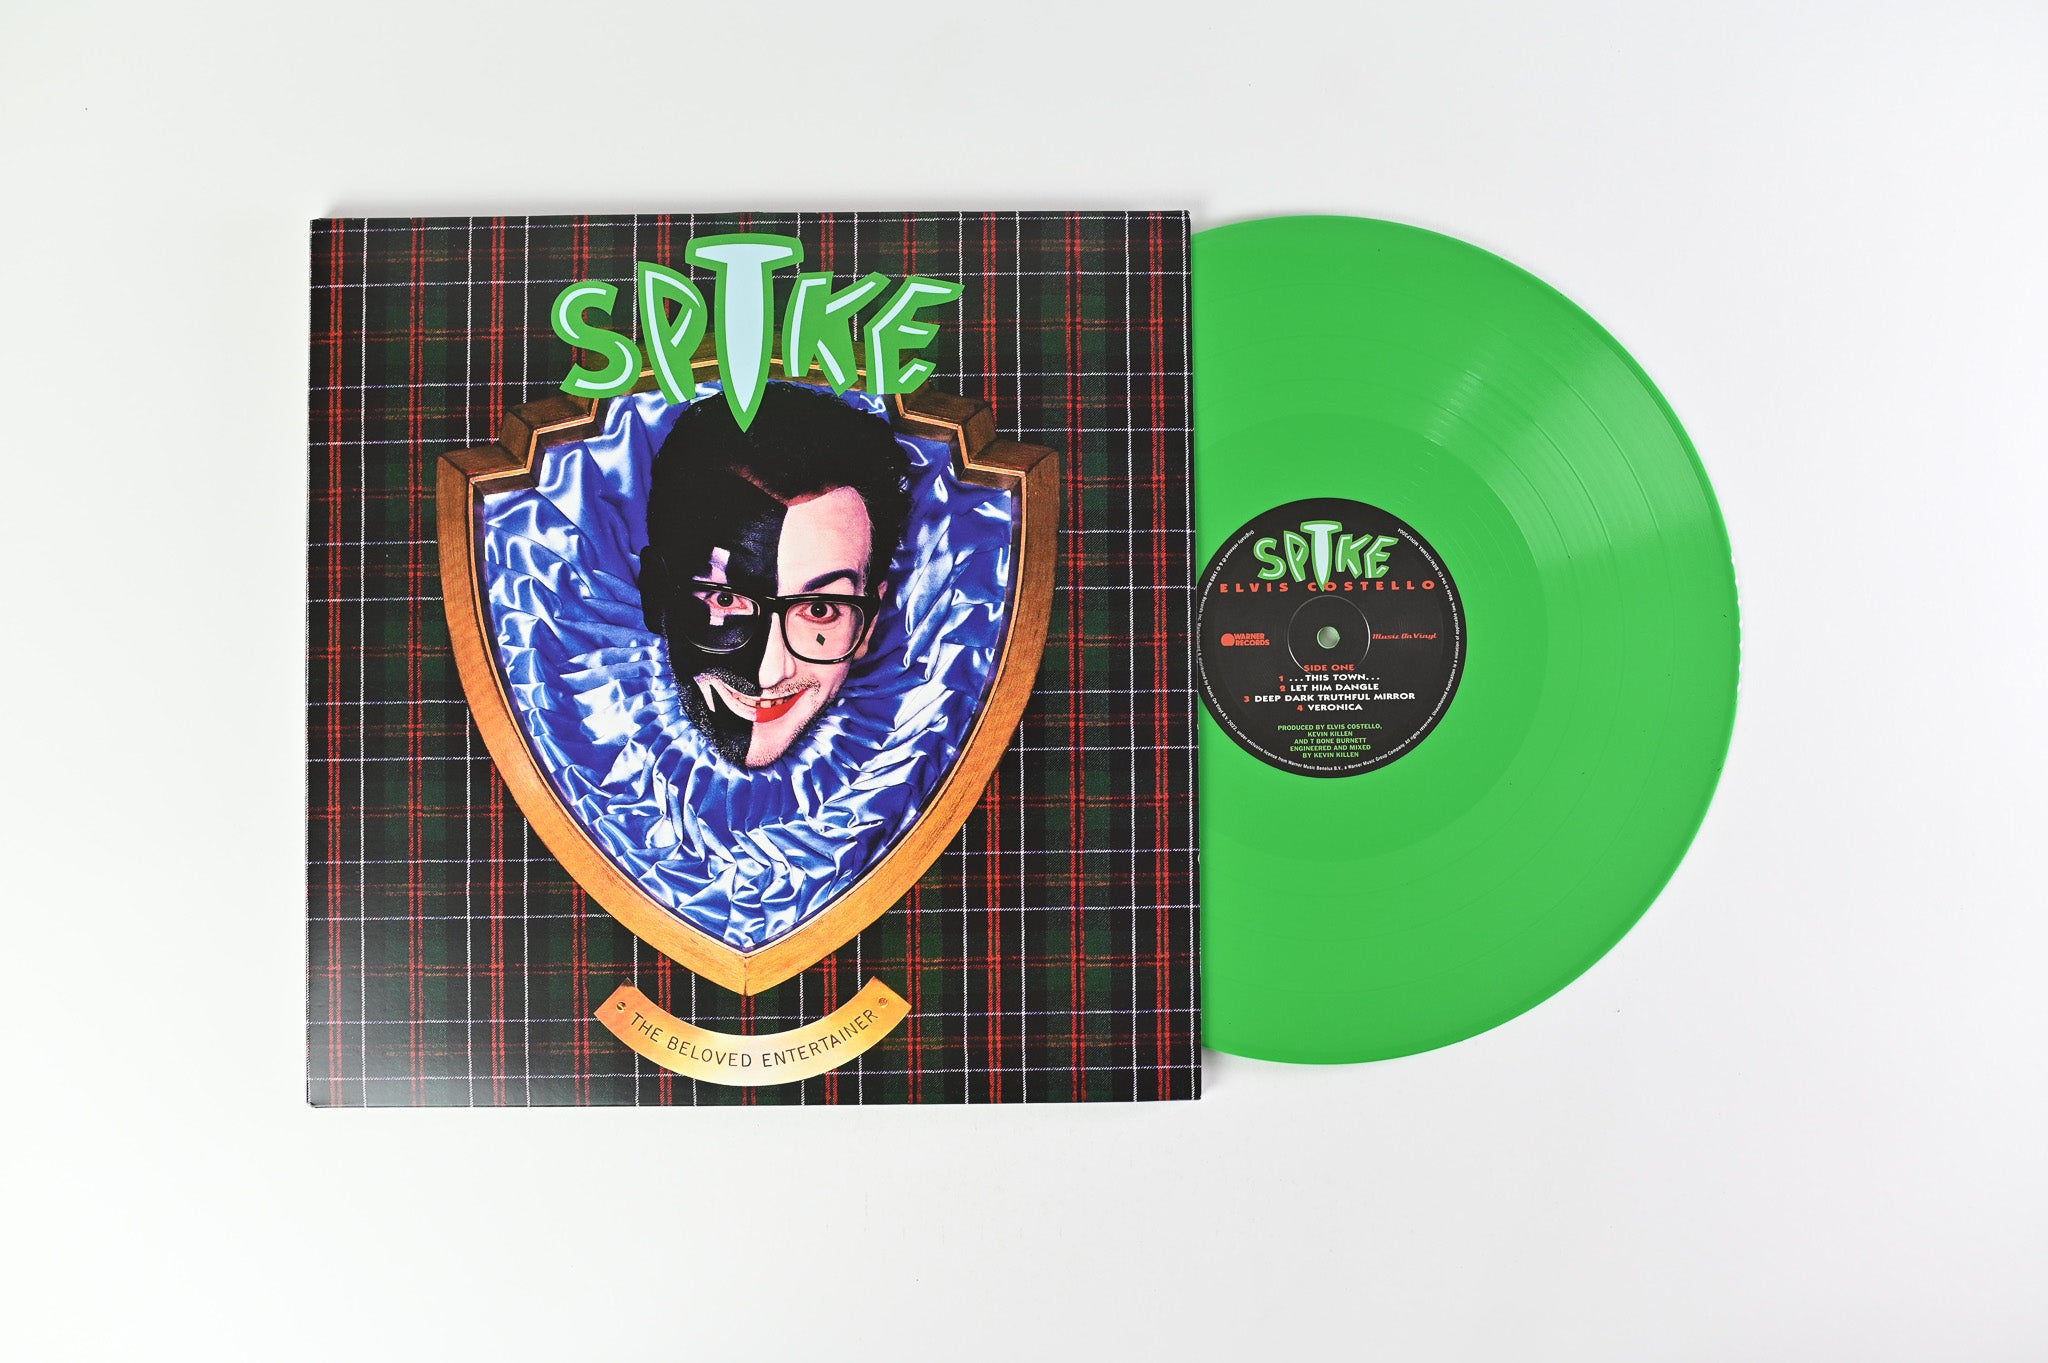 Elvis Costello - Spike Music On Vinyl Ltd Numbered Green Reissue